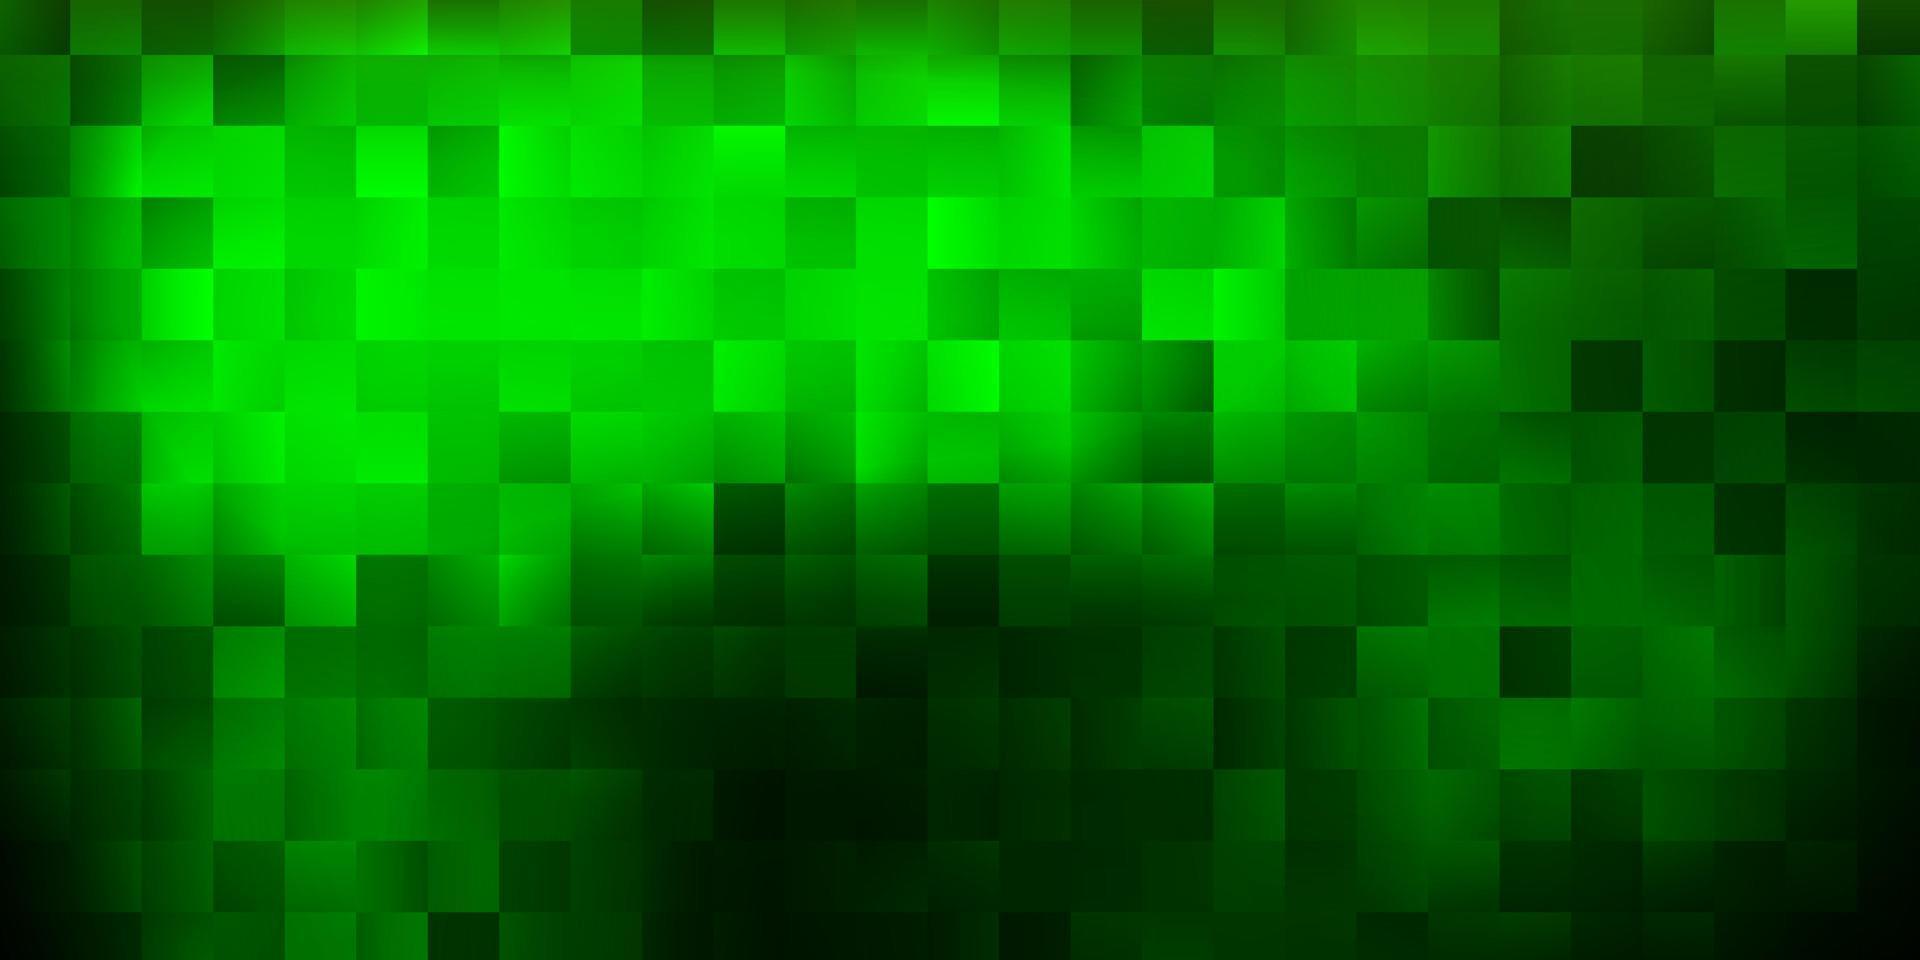 textura de vetor verde escuro, amarelo em estilo poligonal.